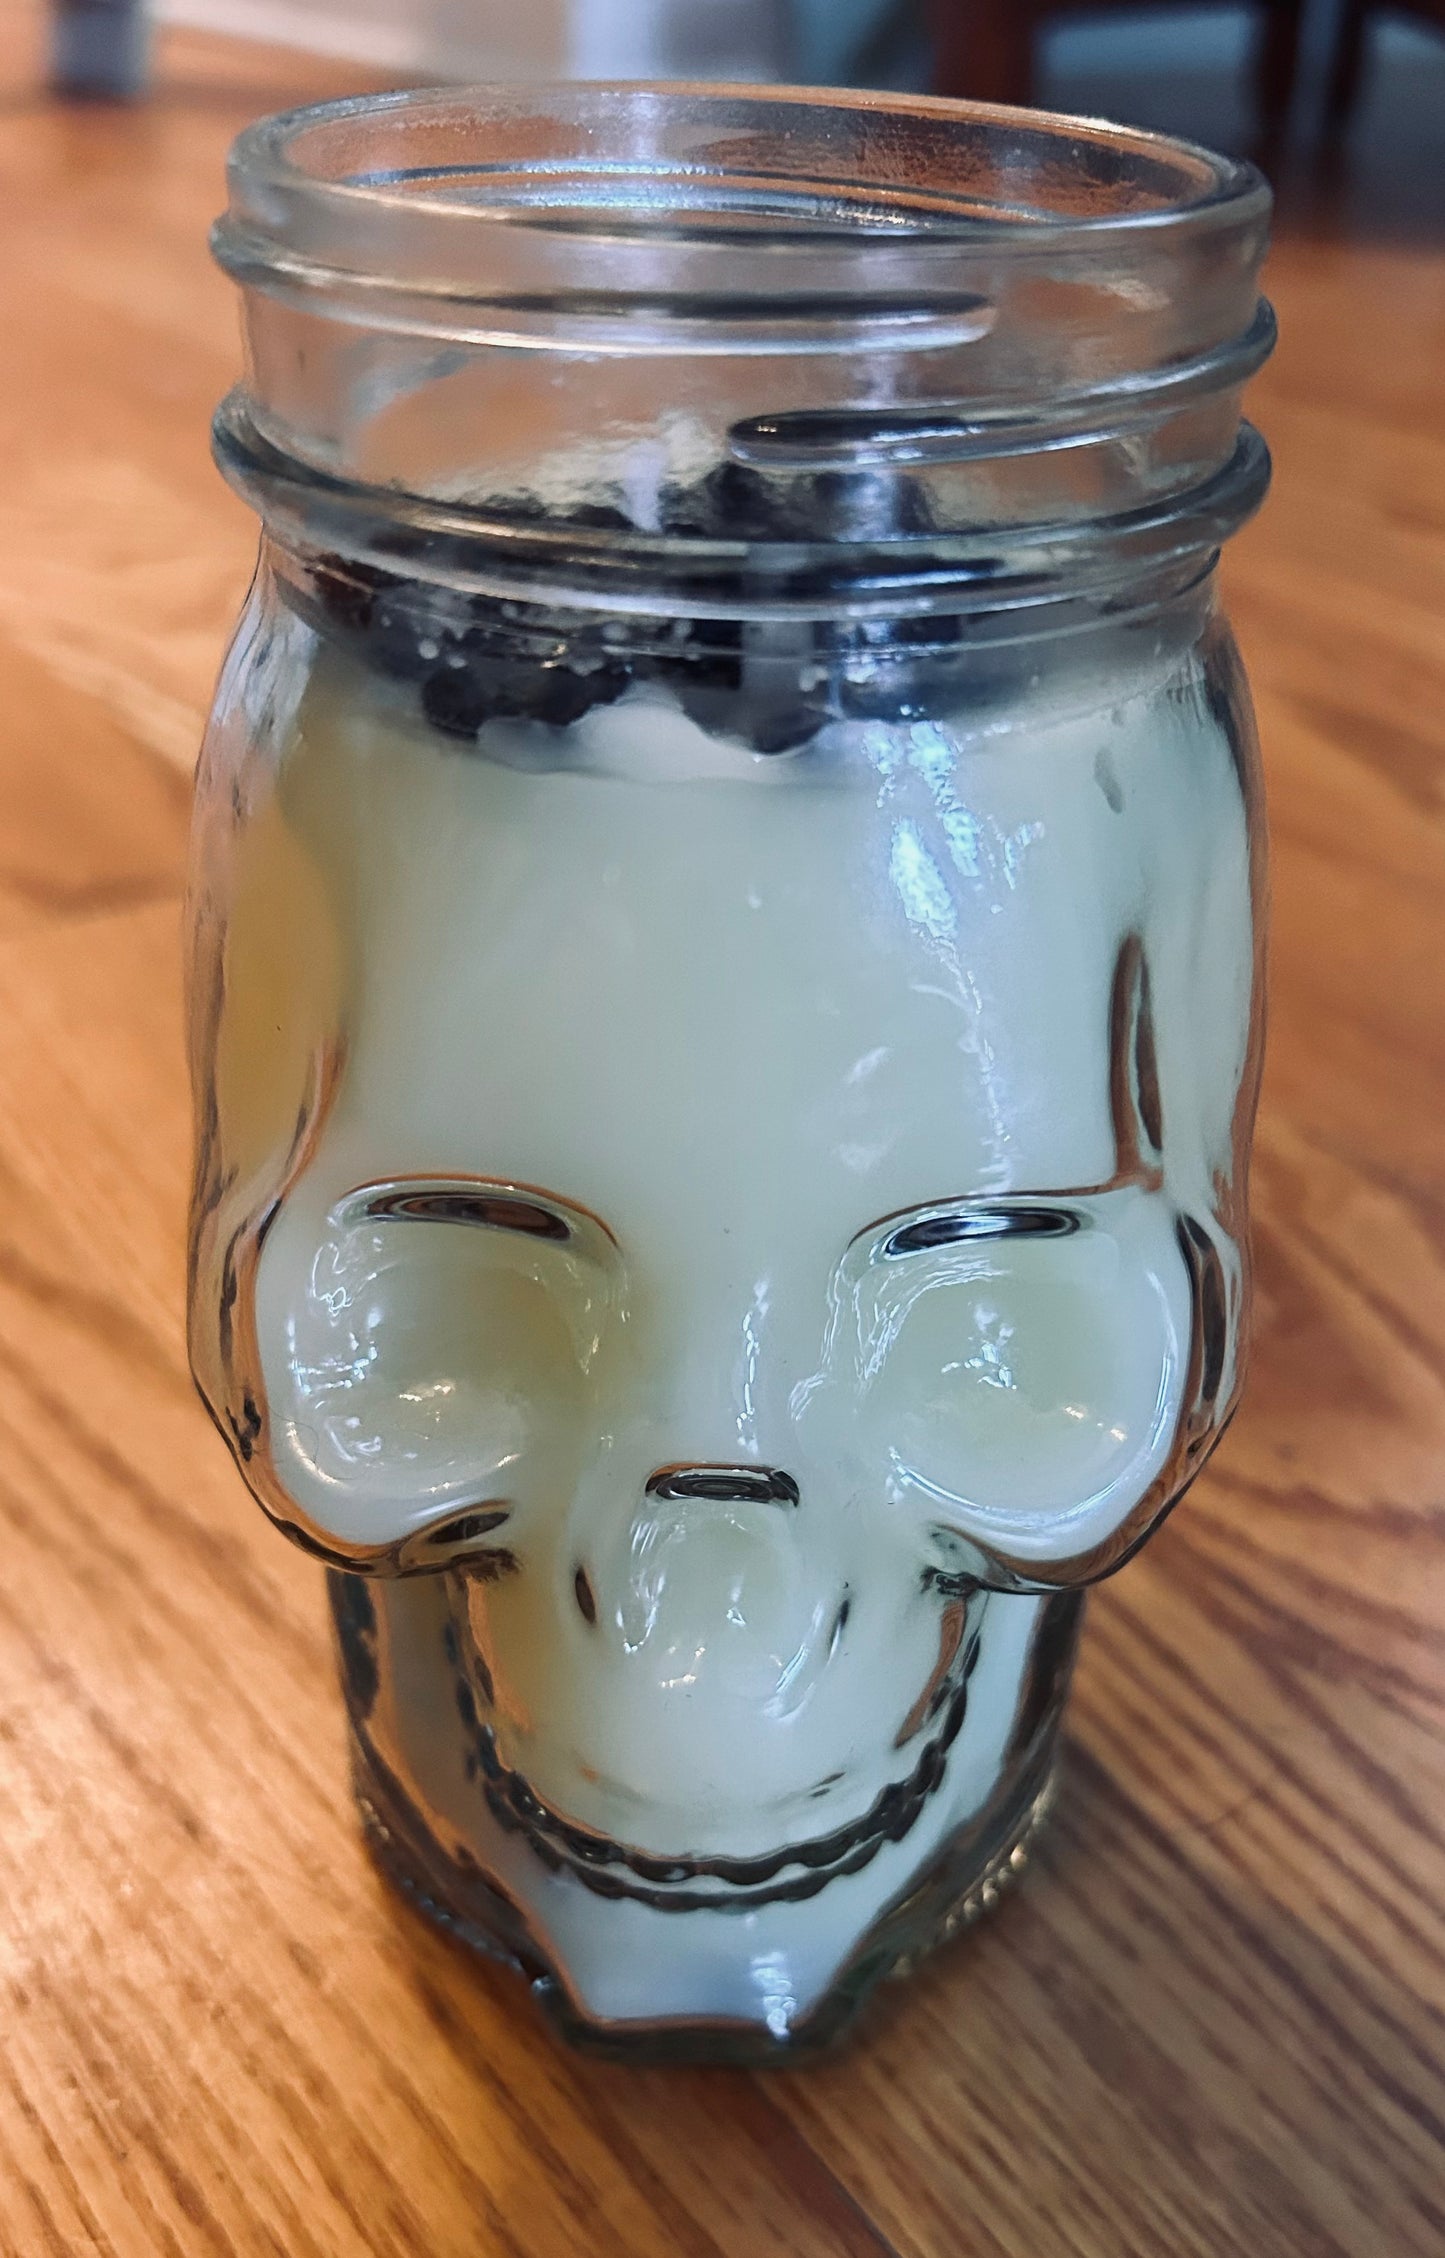 Eclipse Skull Candle: "I release past trauma"